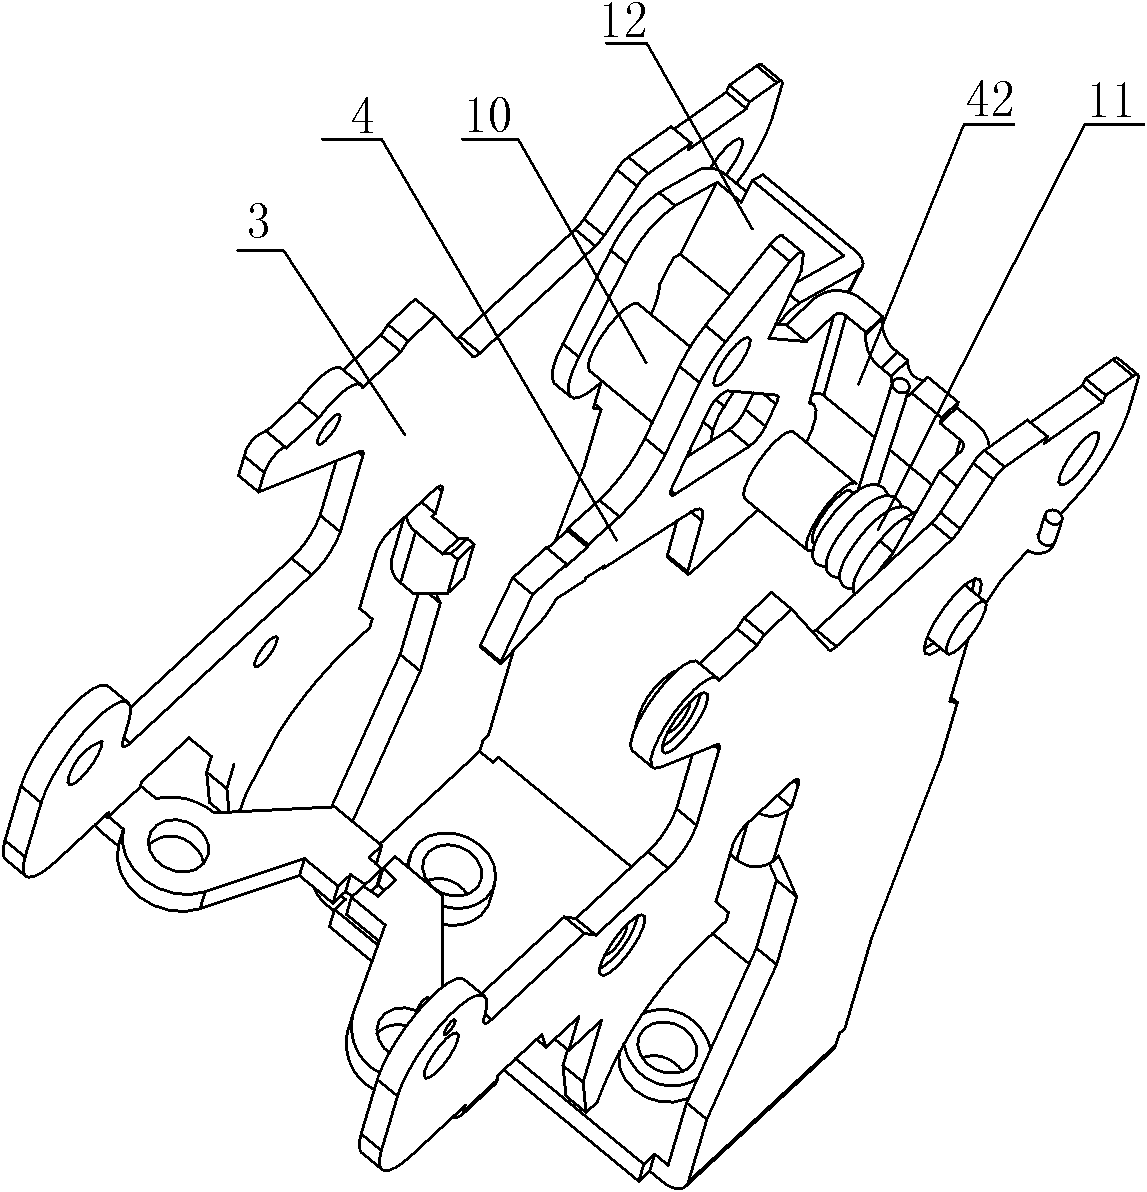 Operating mechanism for molded case circuit breaker